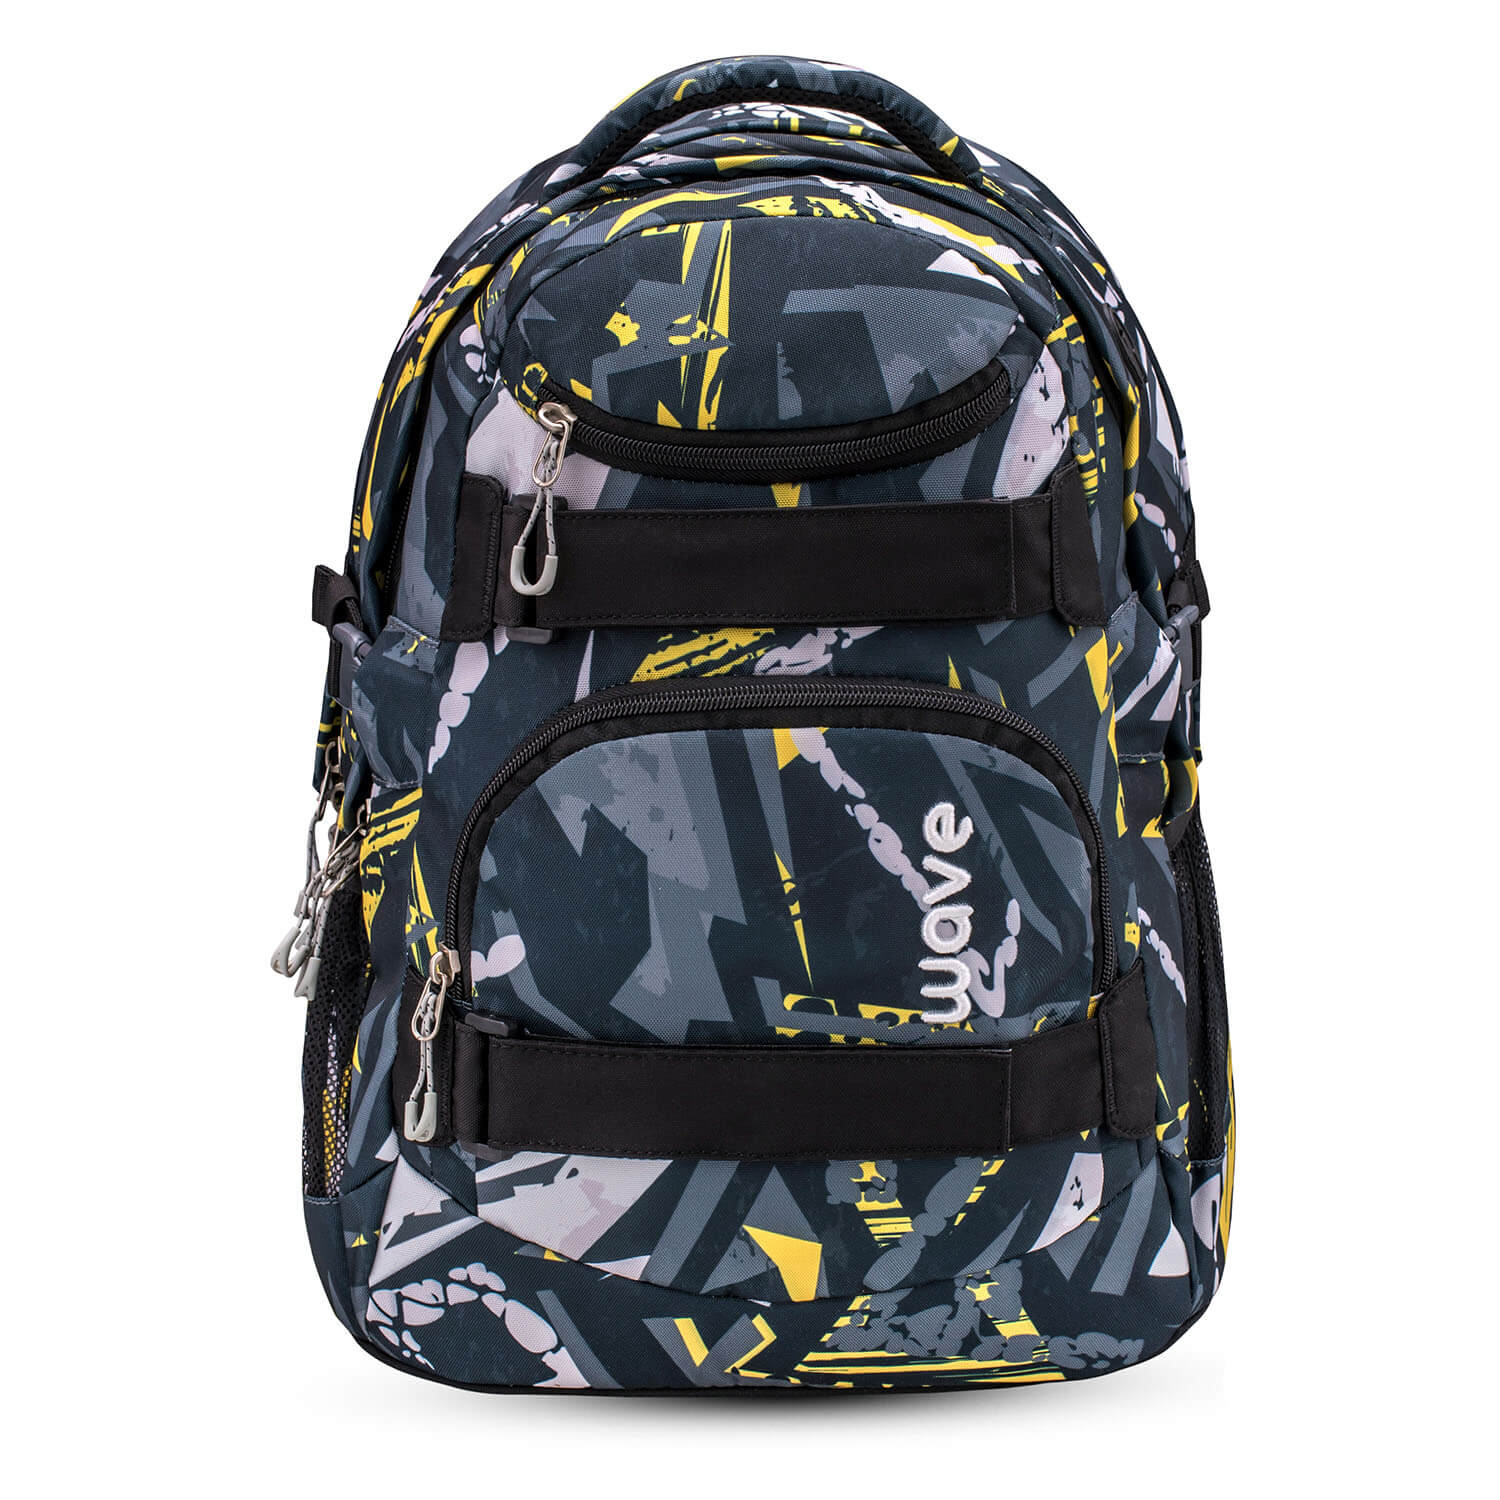 Wave Infinity Yellow Graffiti school backpack